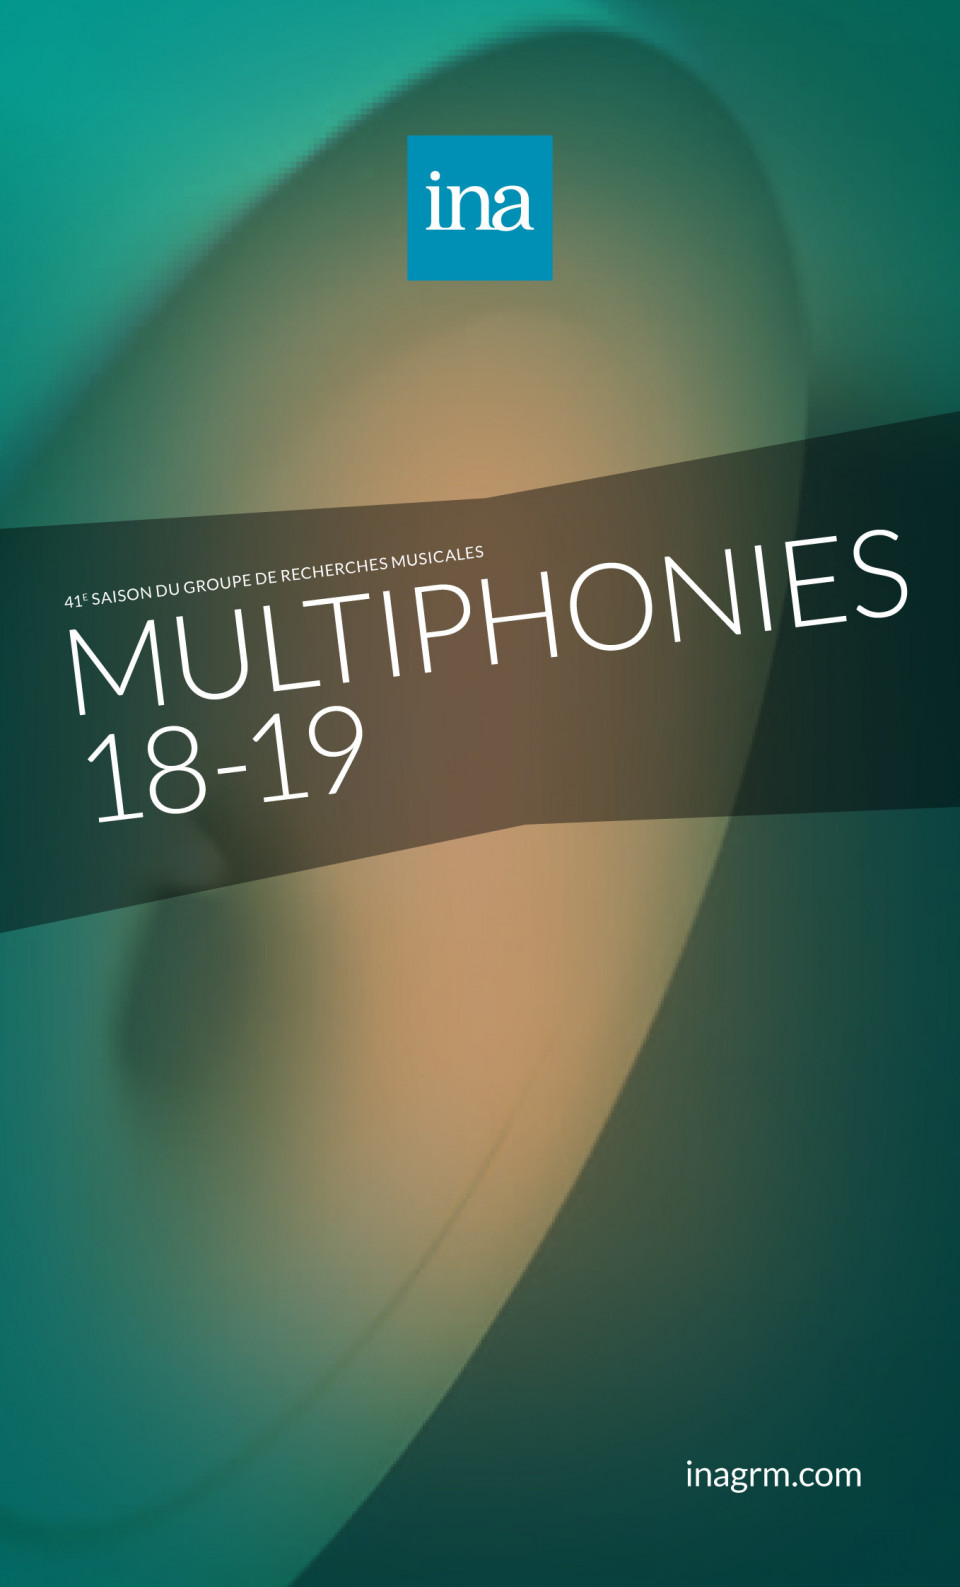 Multiphonies 2018-19, Paris (France), october 5, 2018 – June 2, 2019